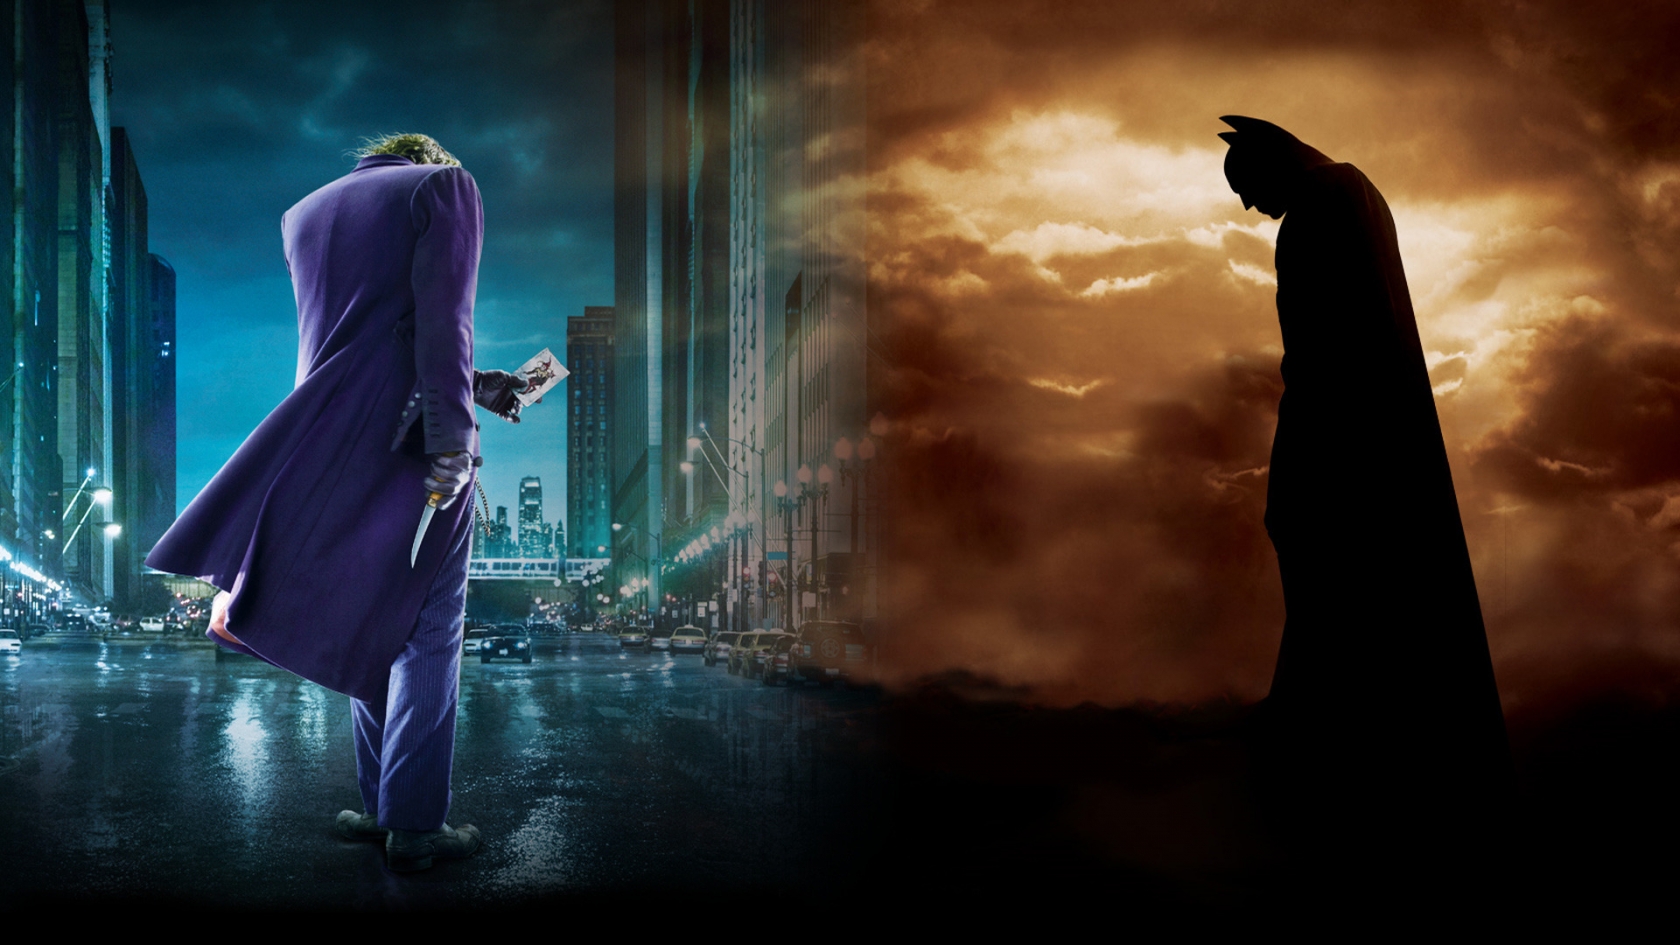 Batman and The Joker for 1680 x 945 HDTV resolution